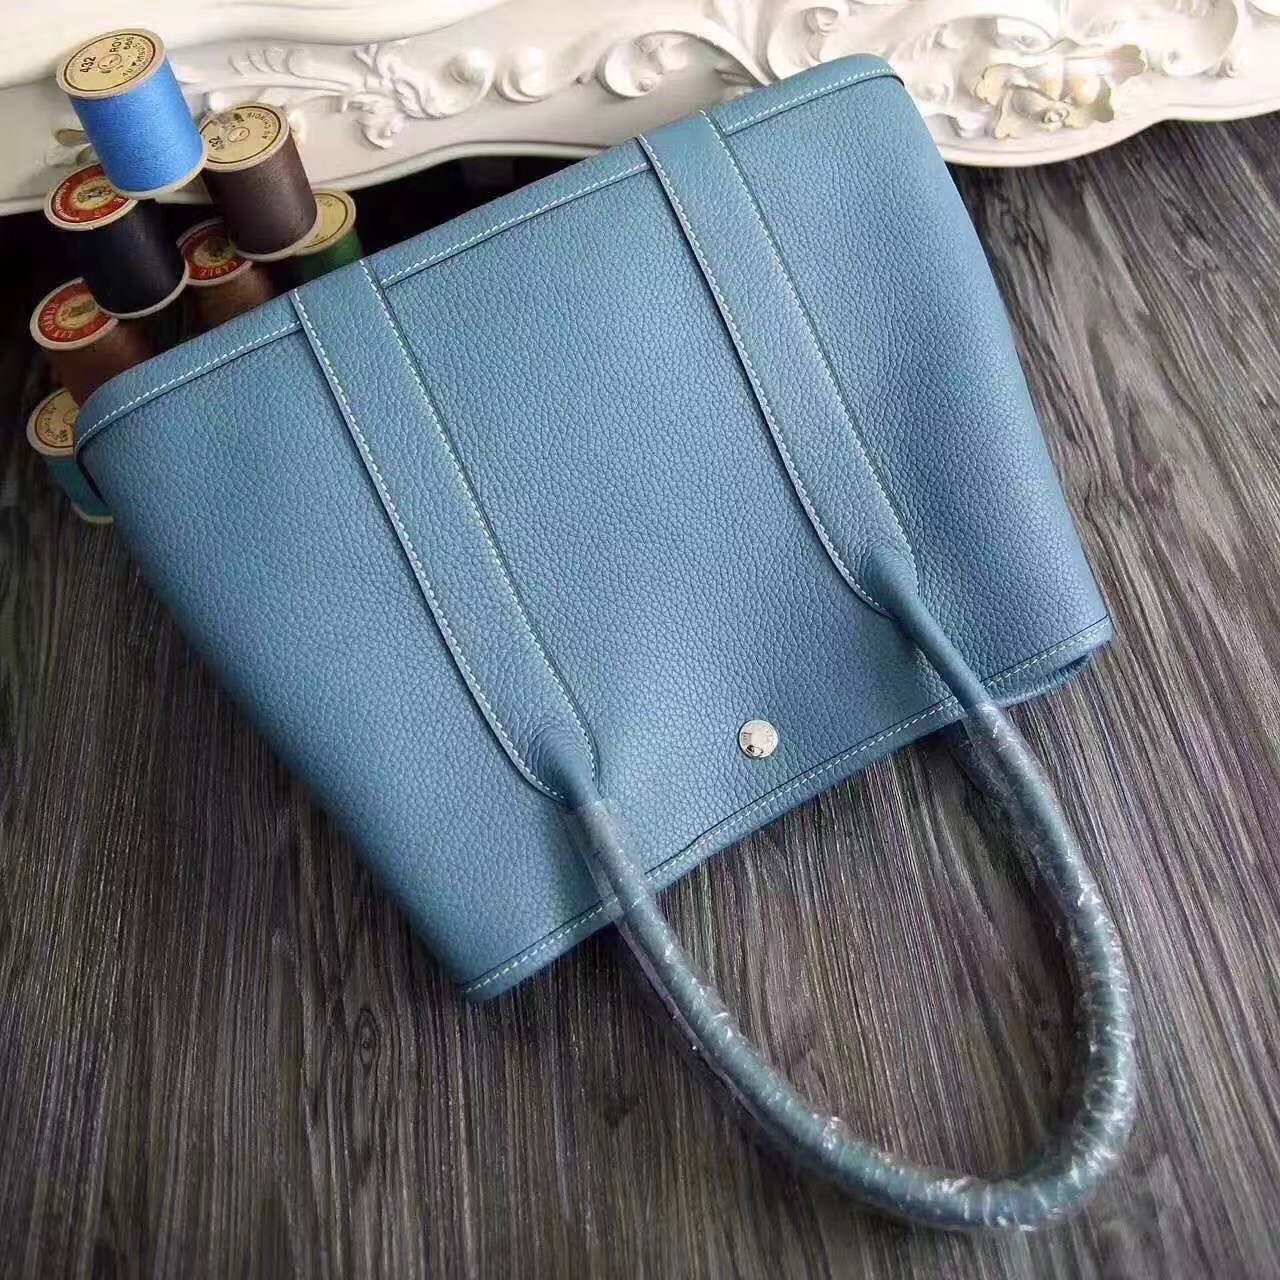 Hermes Garden Party leather blue top handbags